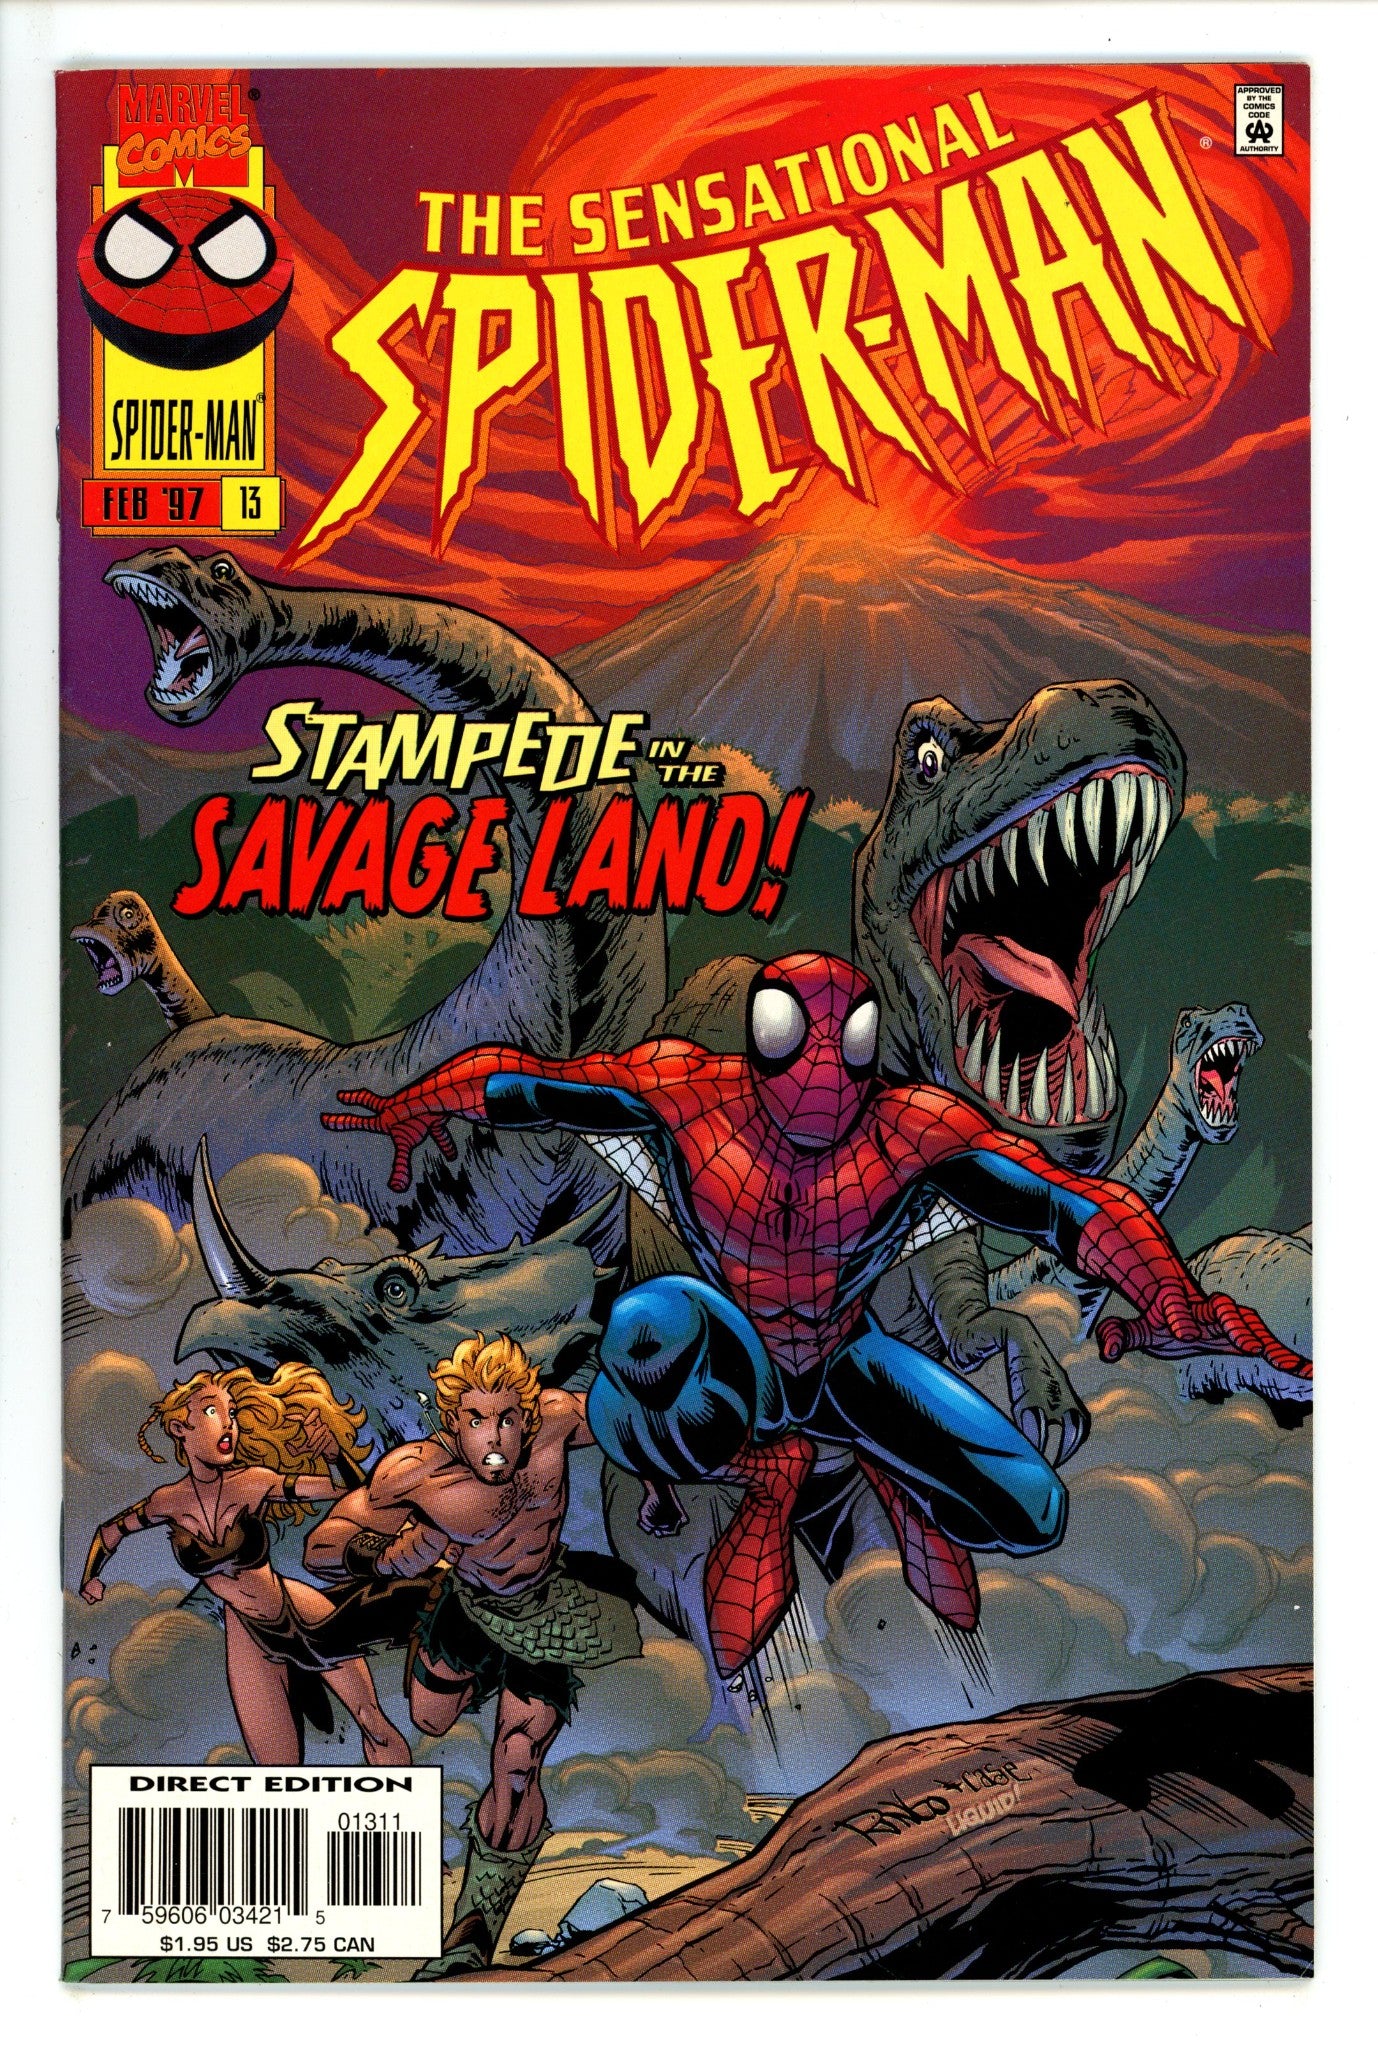 The Sensational Spider-Man Vol 1 13 (1996)